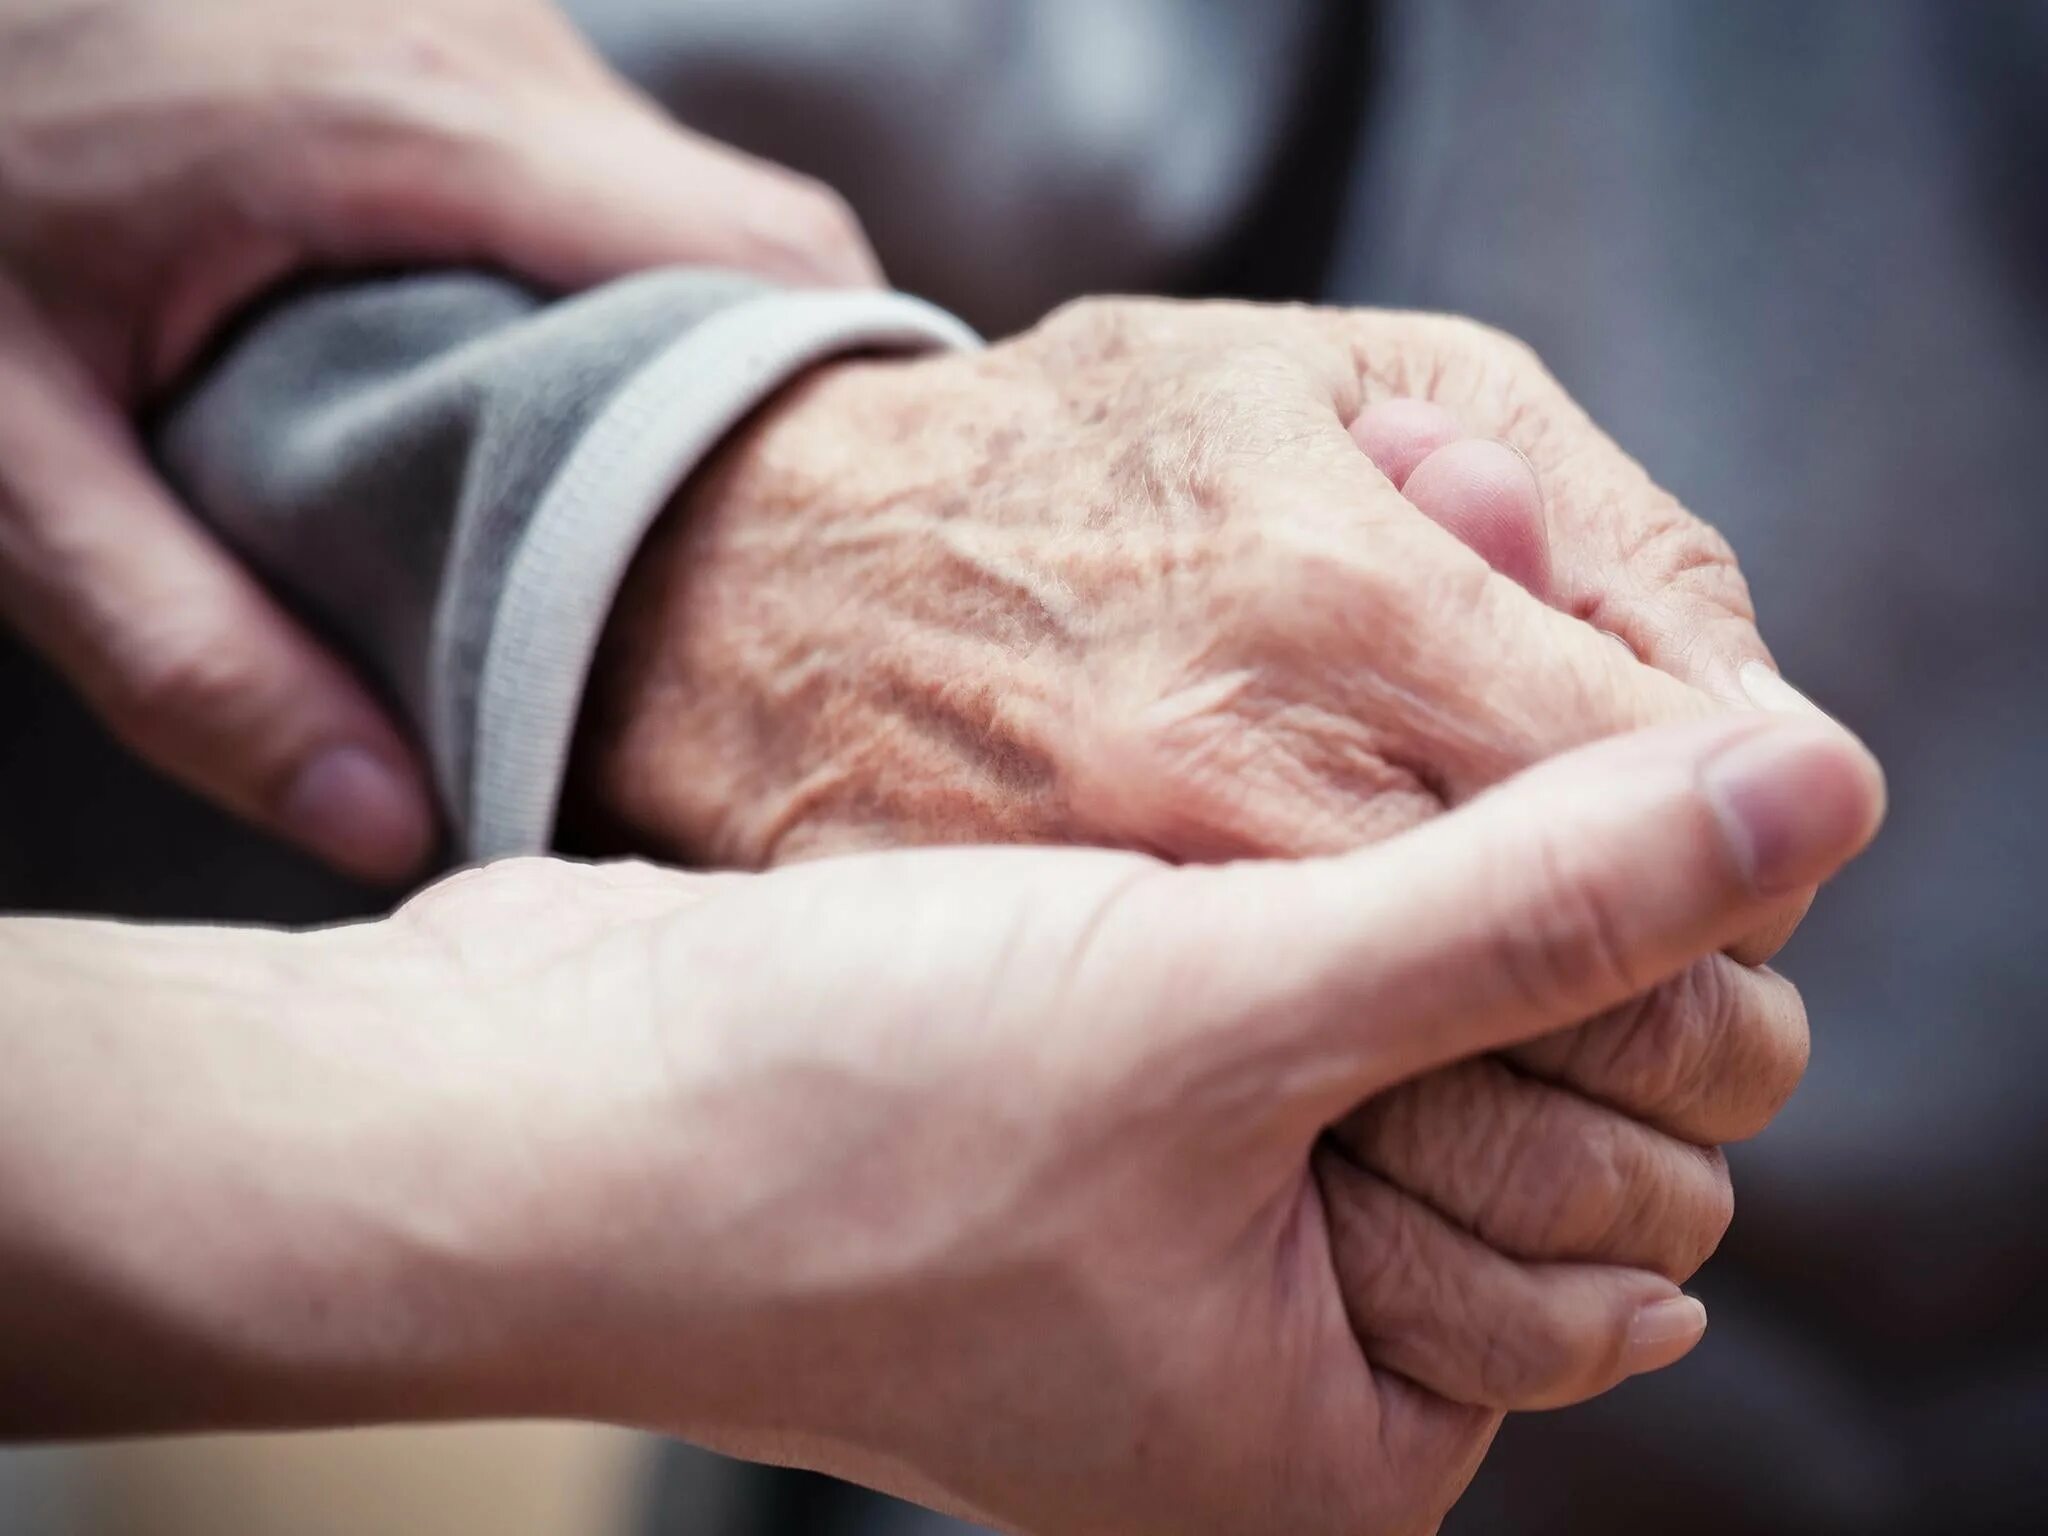 Фото рука помощи при деменции. Картинки руки помощи престарелым медицина. Пожизненная рента картинки. Begging by hand.